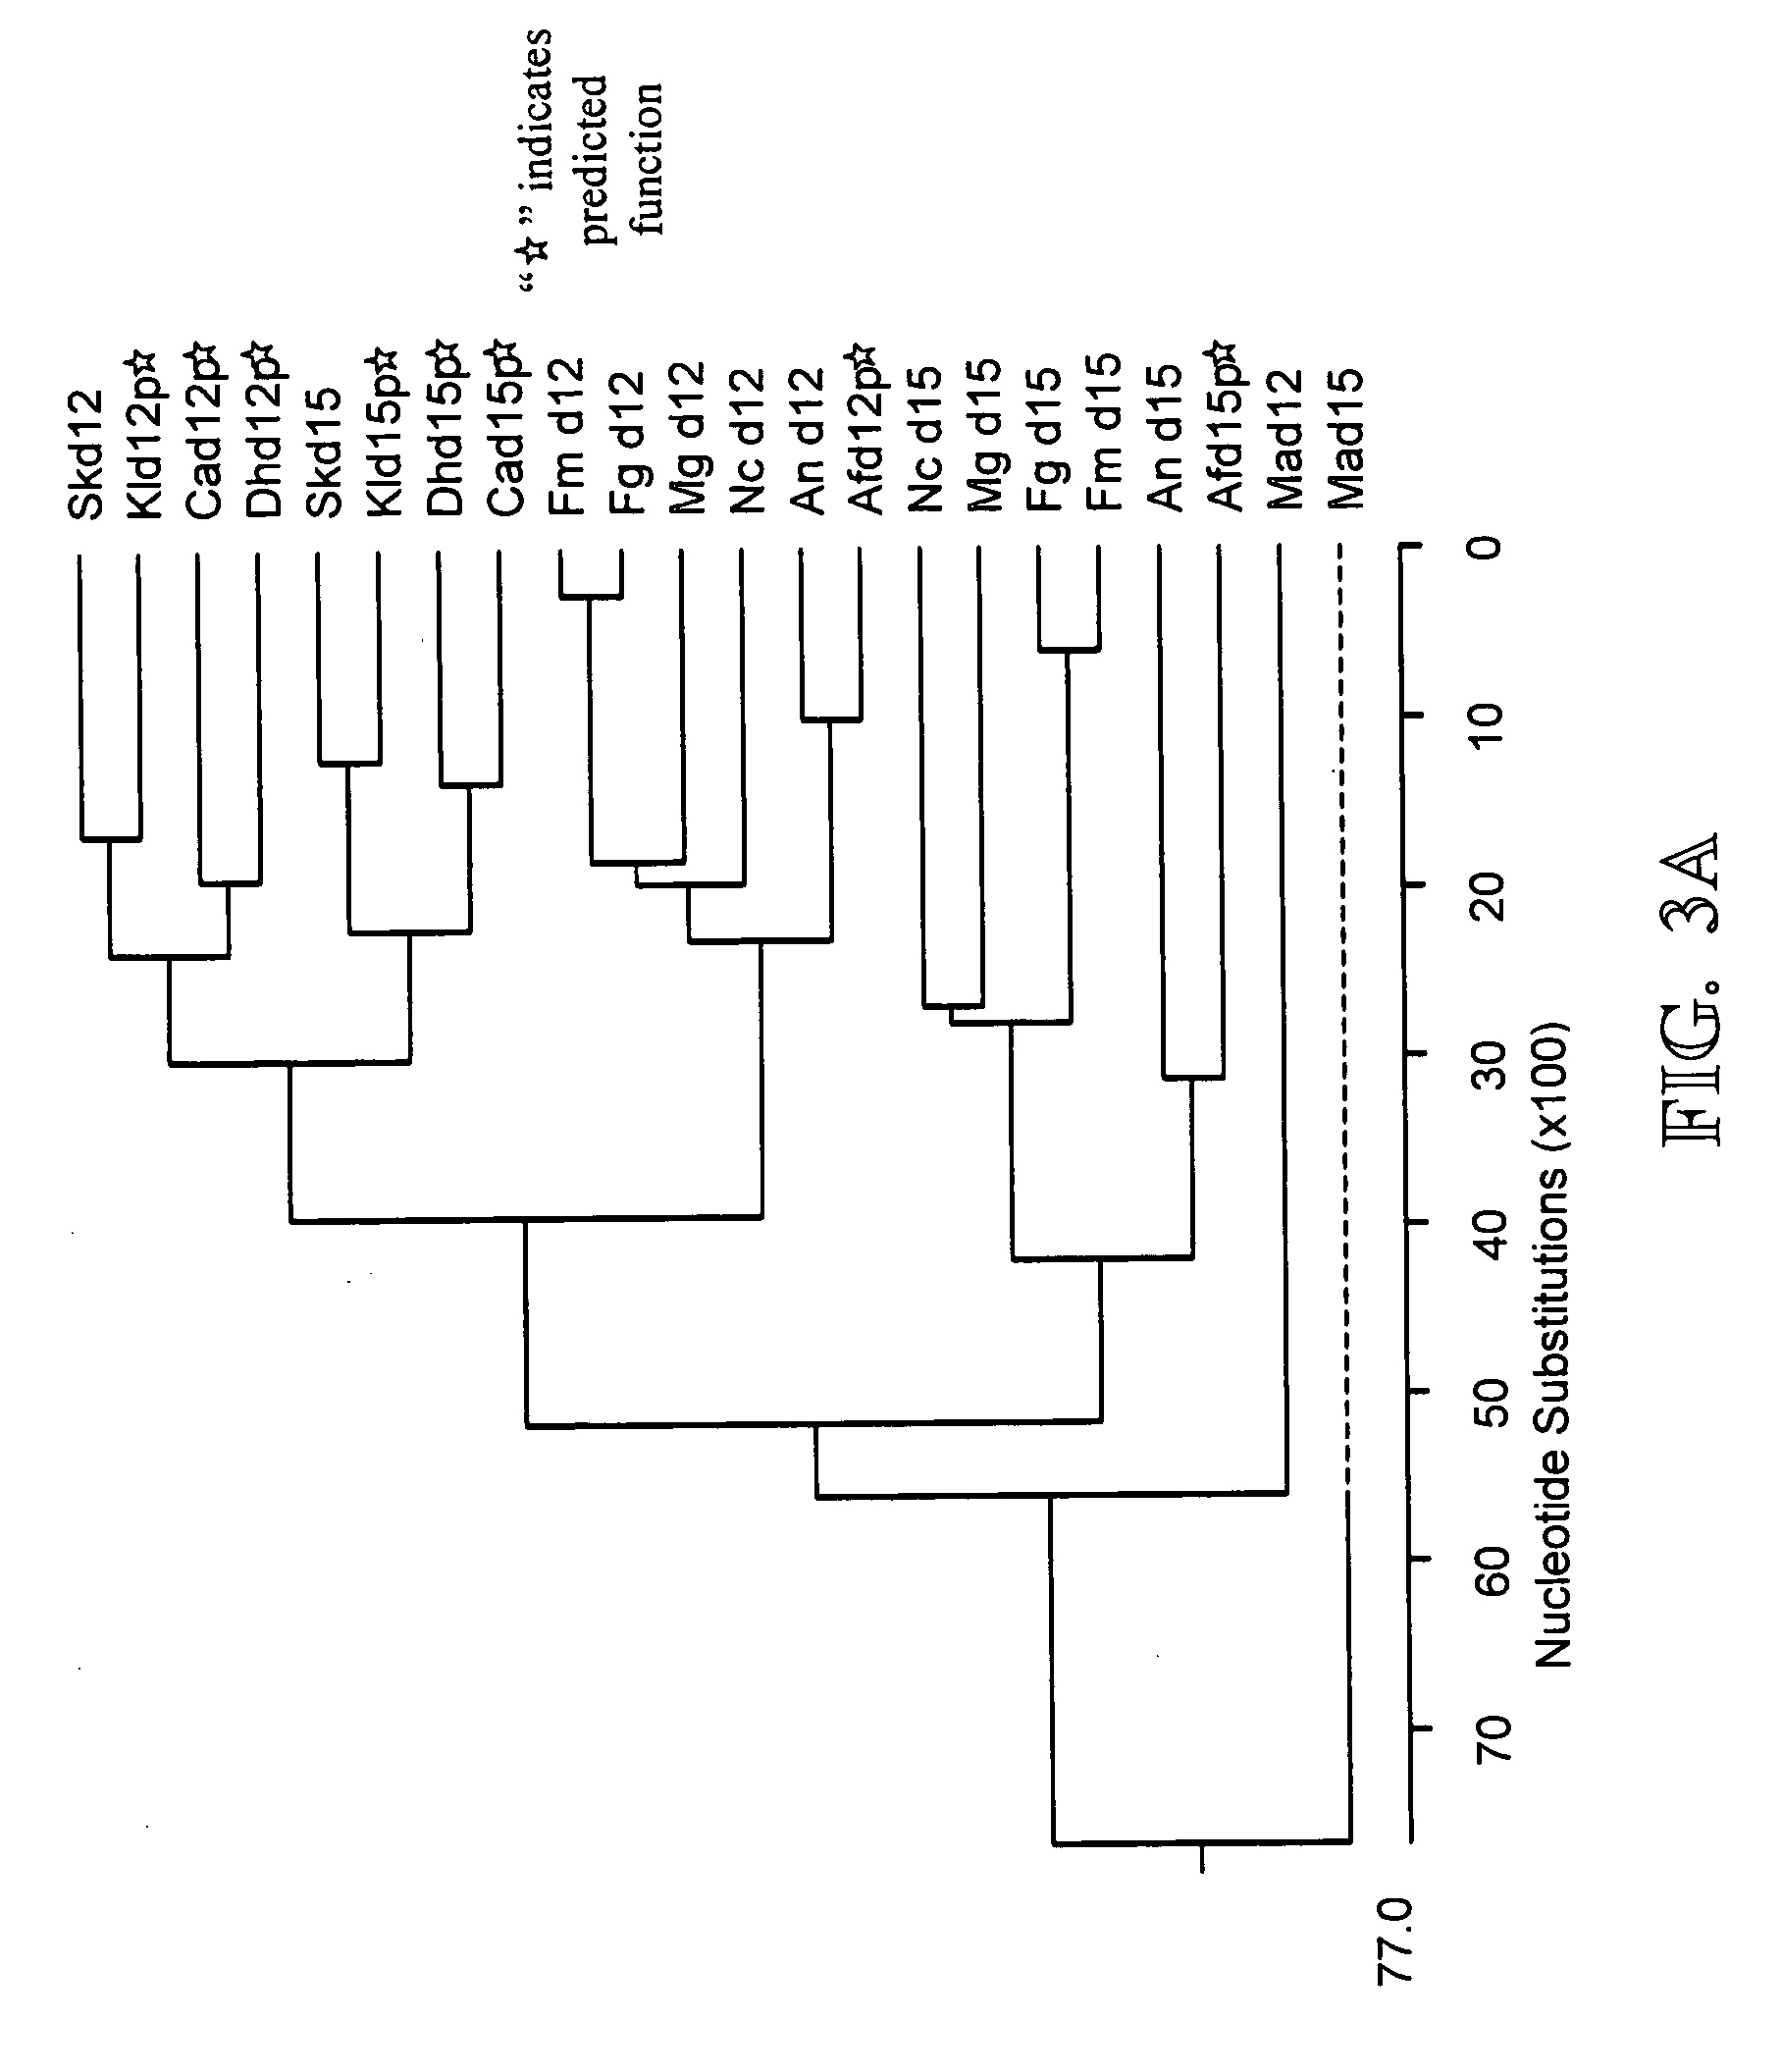 High eicosapentaenoic acid producing strains of Yarrowia lipolytica